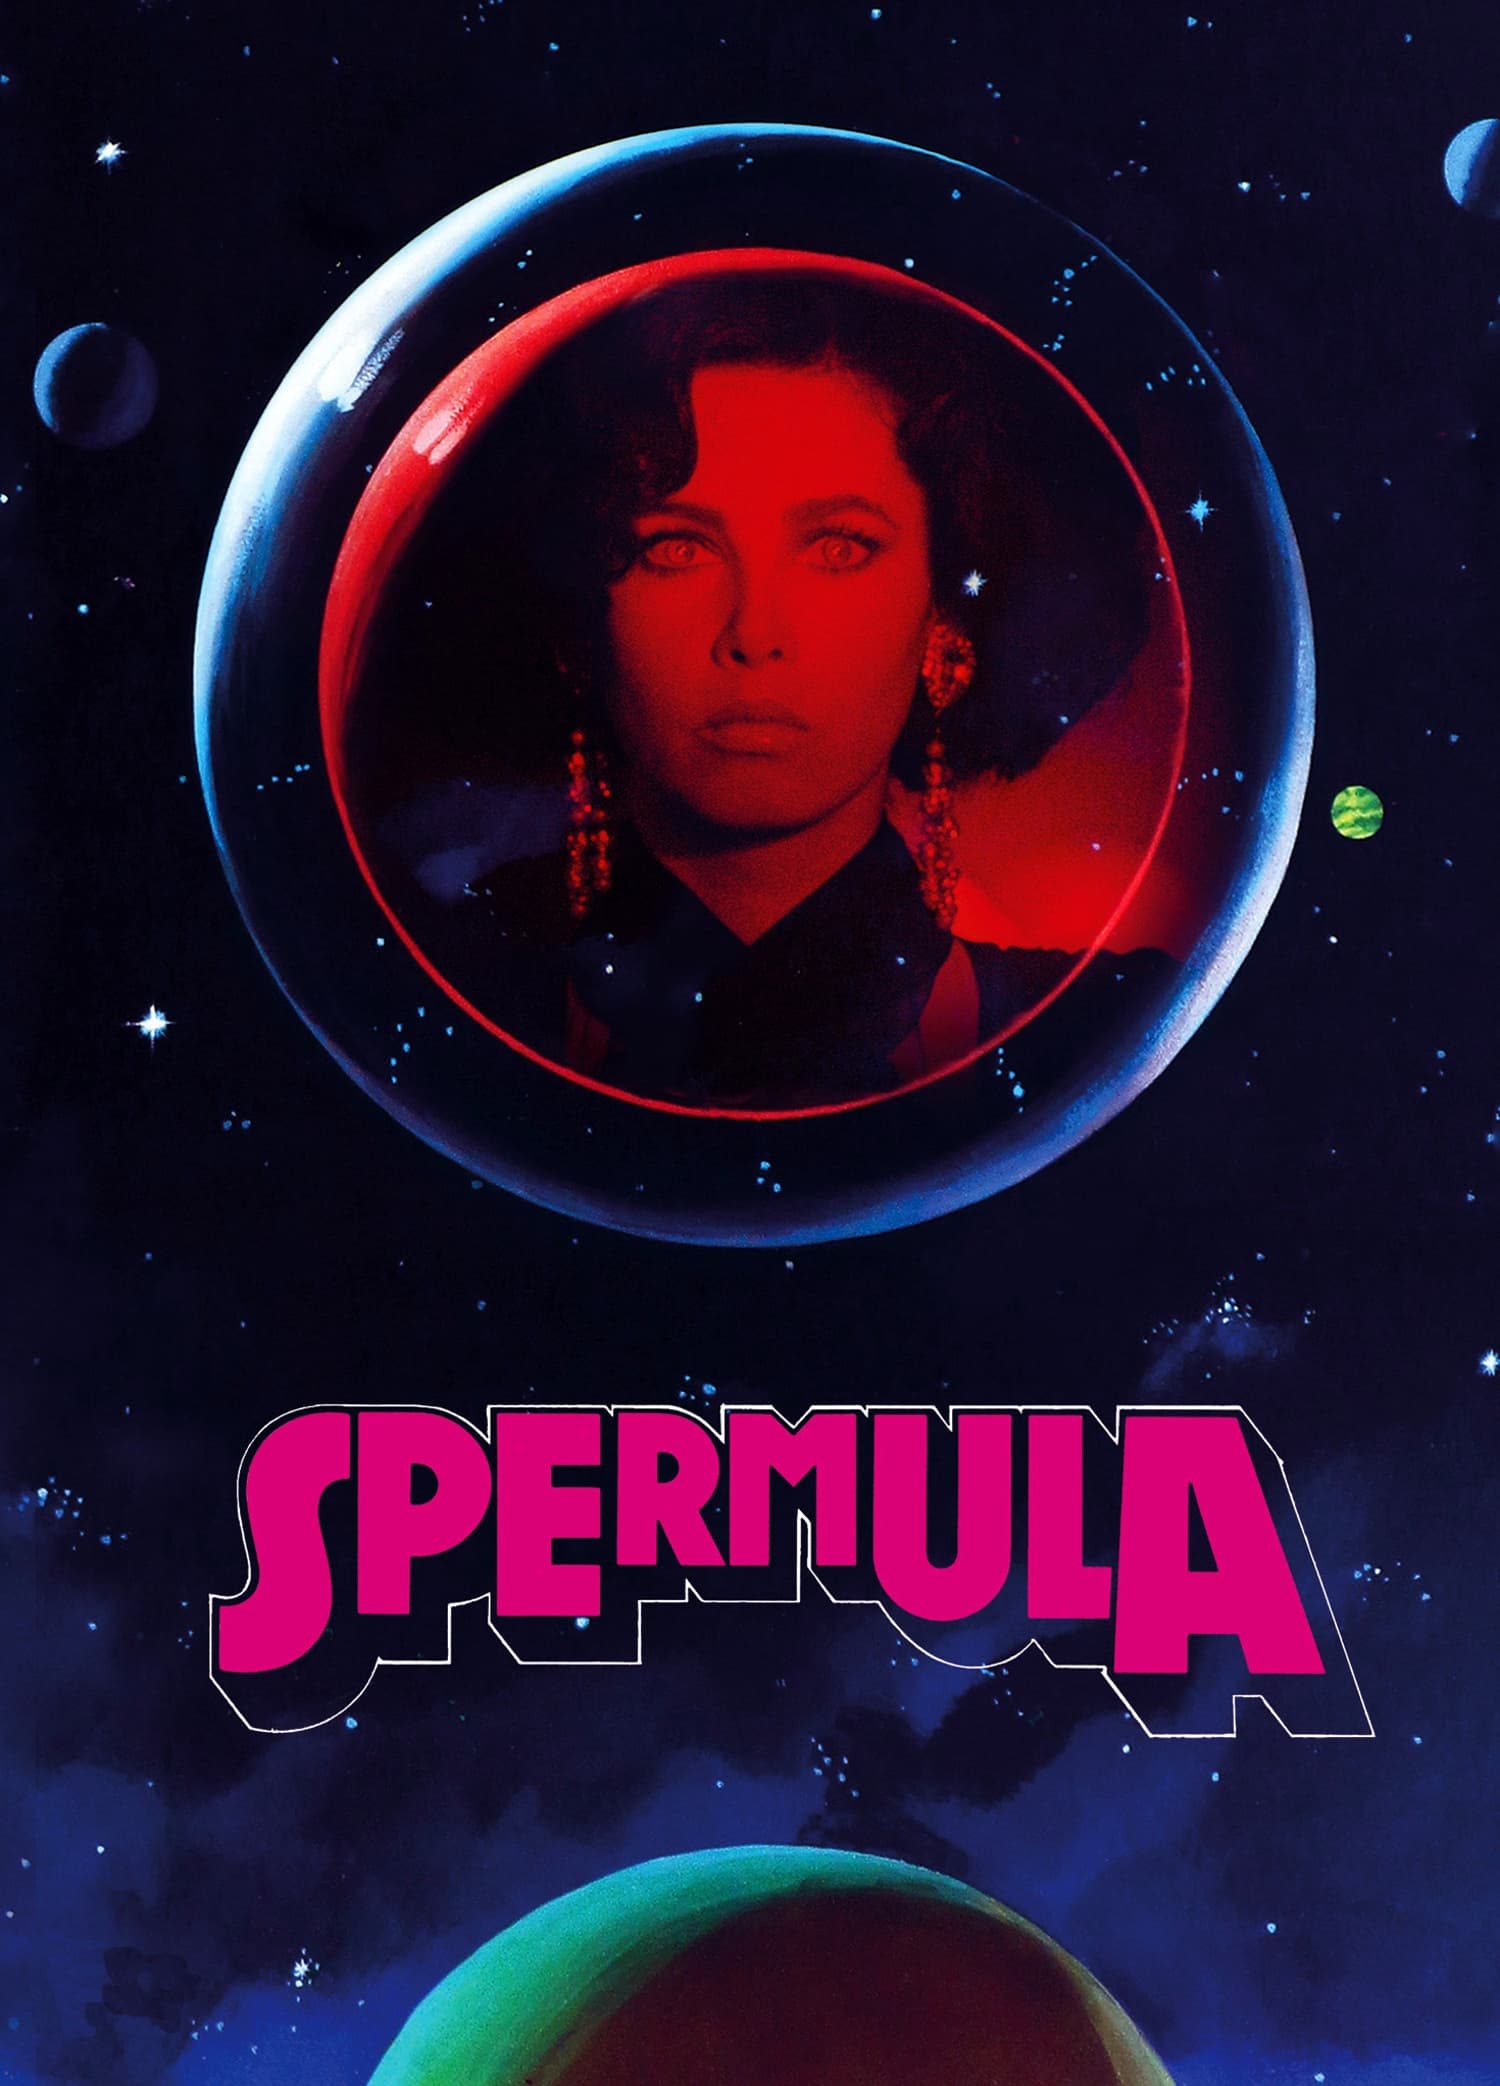 Spermula